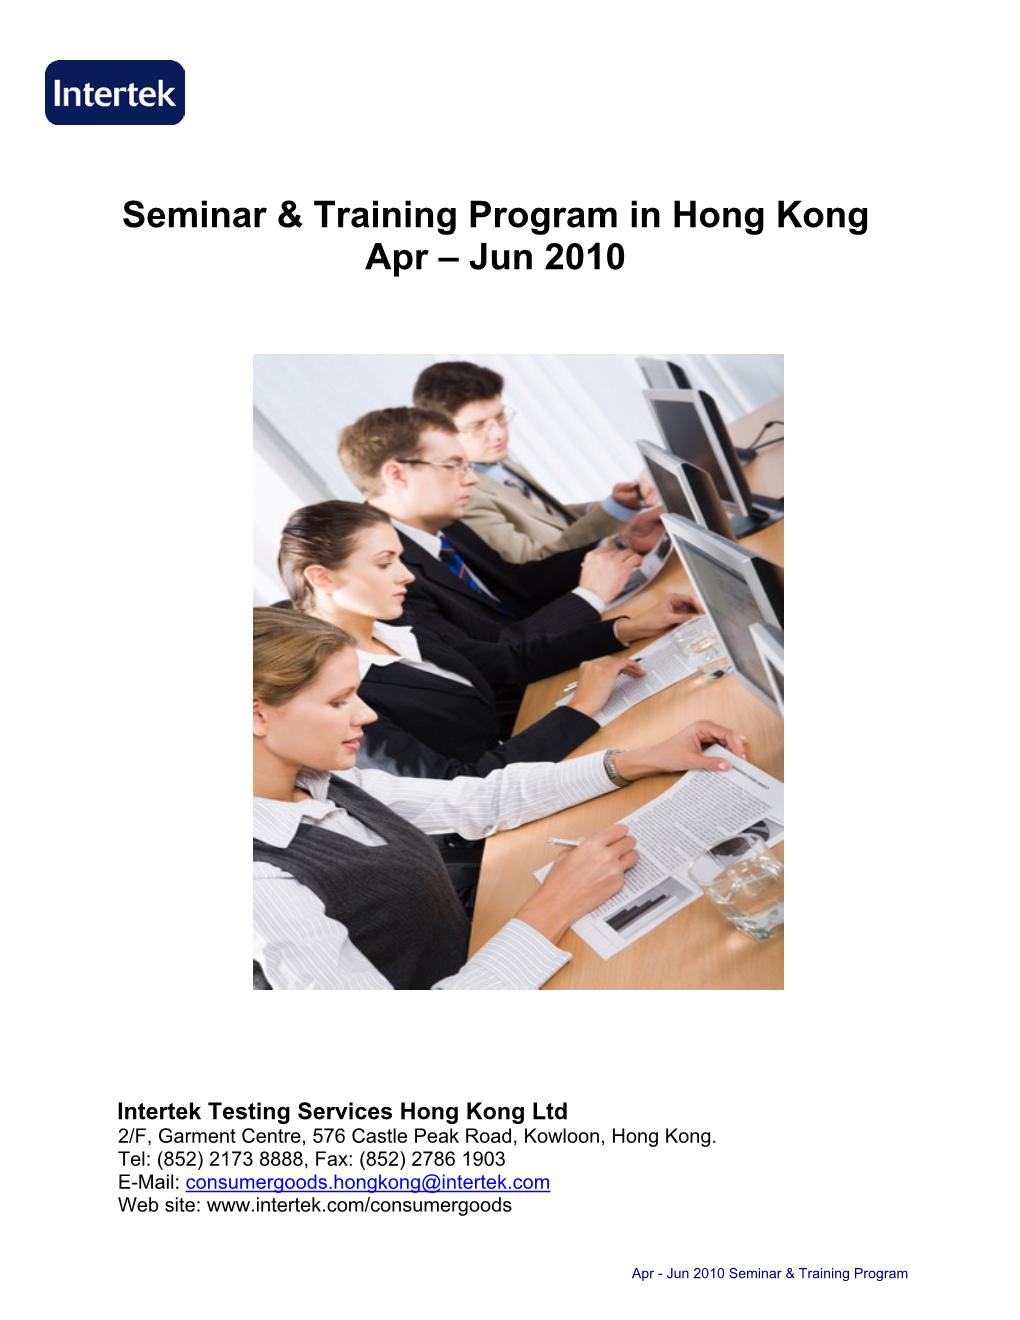 Seminar Schedule in Hong Kong